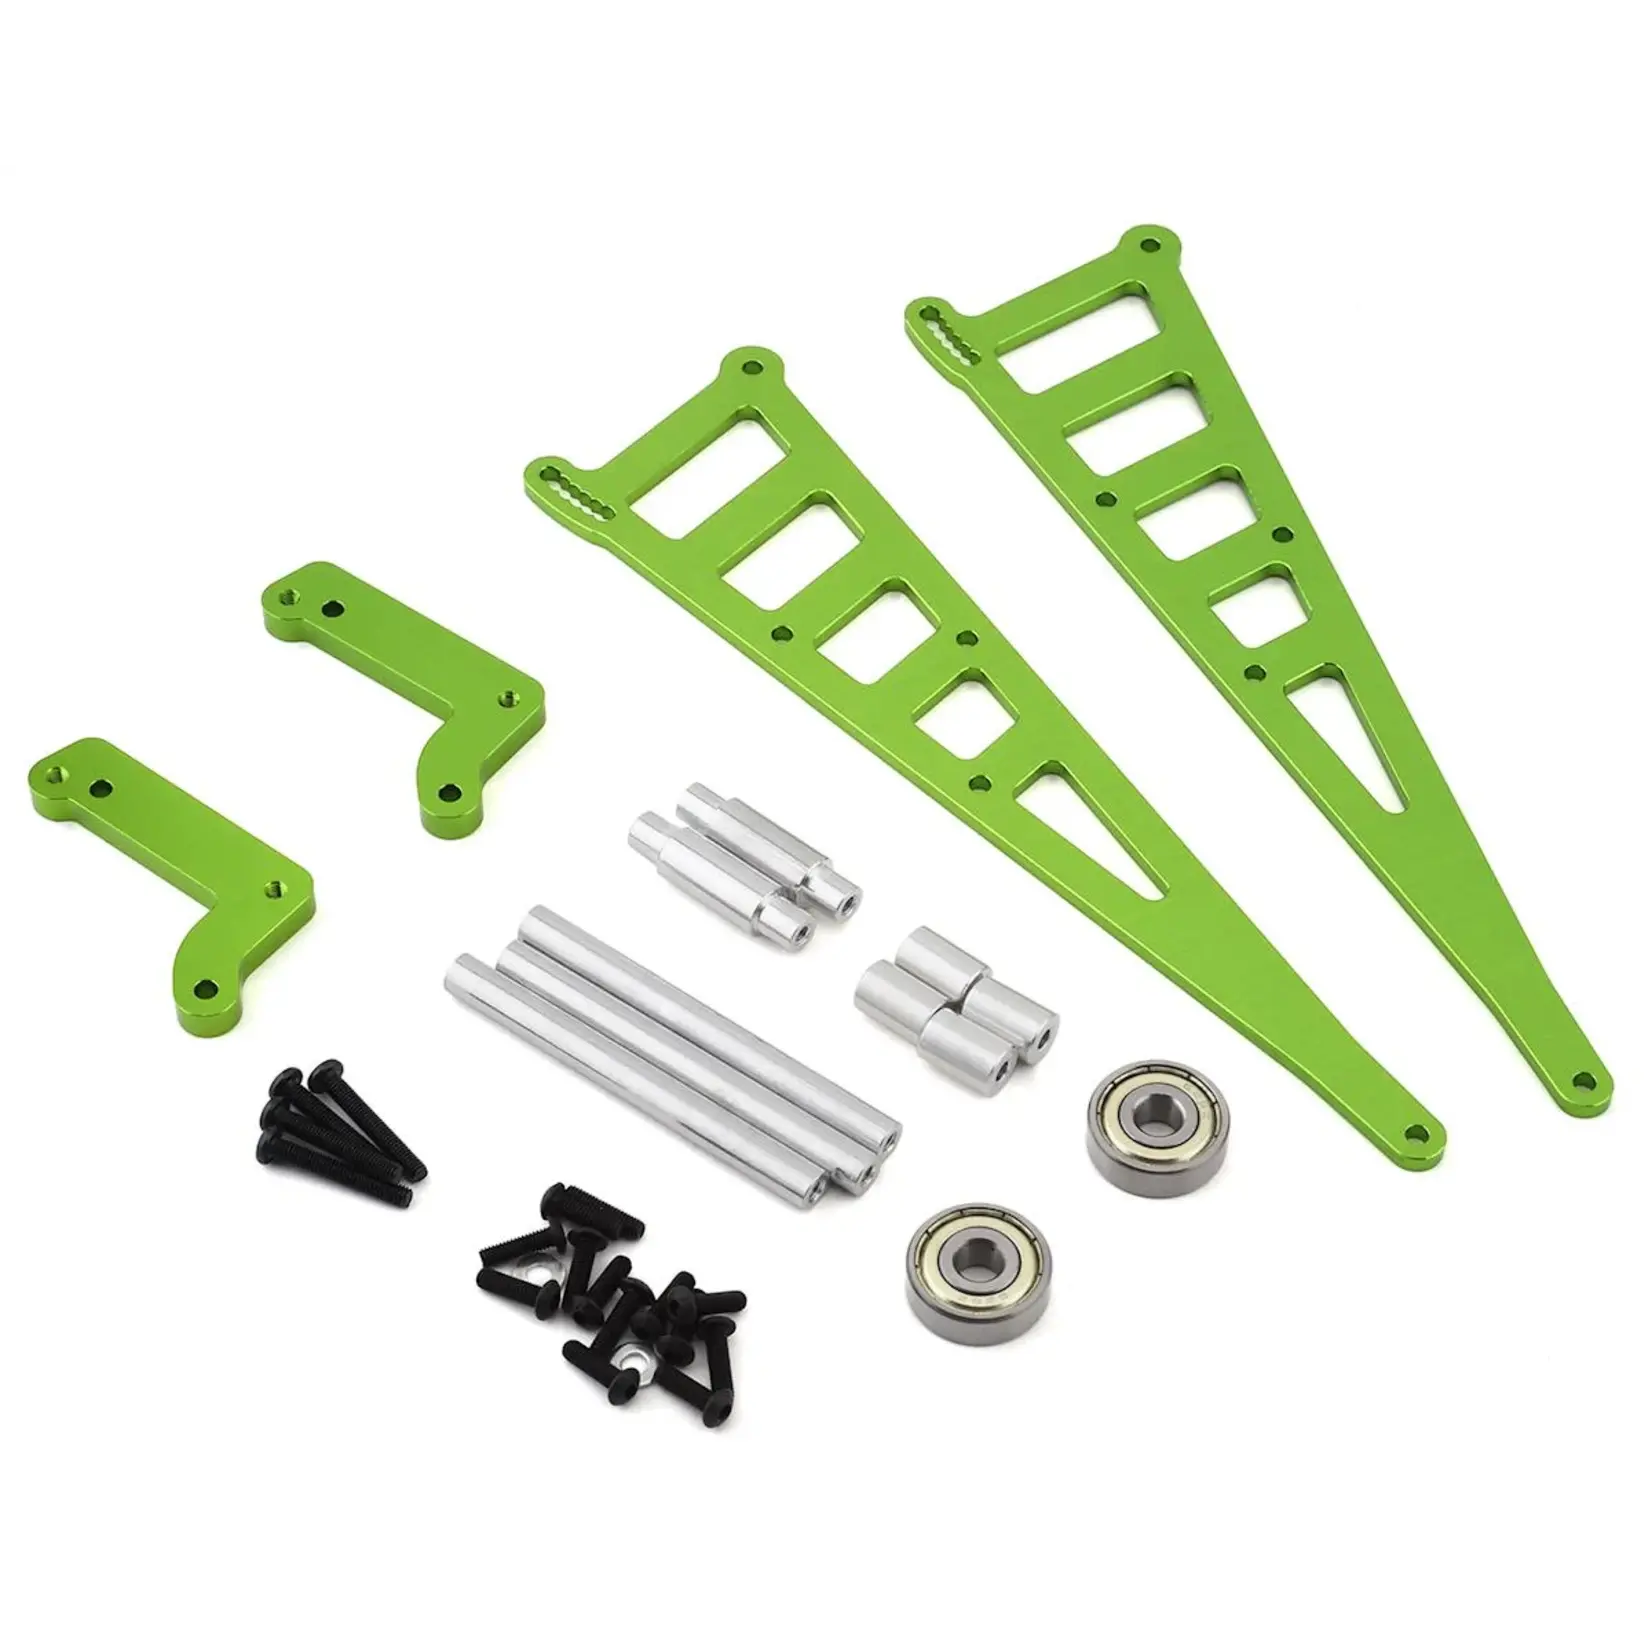 ST Racing Concepts ST Racing Concepts DR10 Aluminum Wheelie Bar Kit (Green) #STC71071G